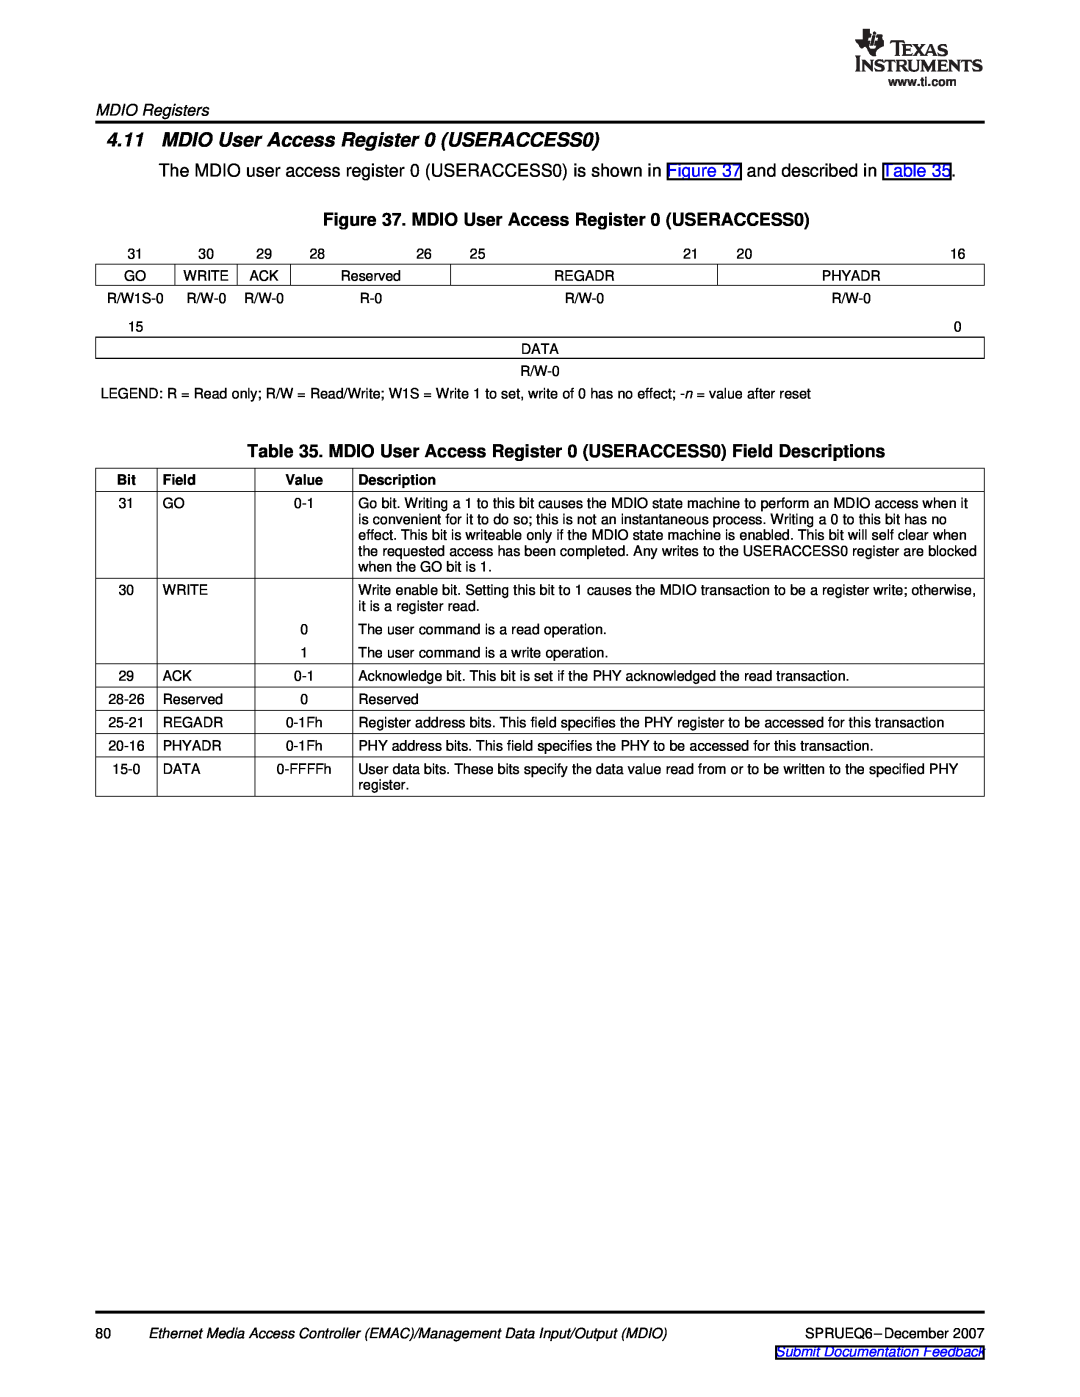 Texas Instruments TMS320DM646x manual MDIO User Access Register 0 USERACCESS0, MDIO Registers, Field, Description 